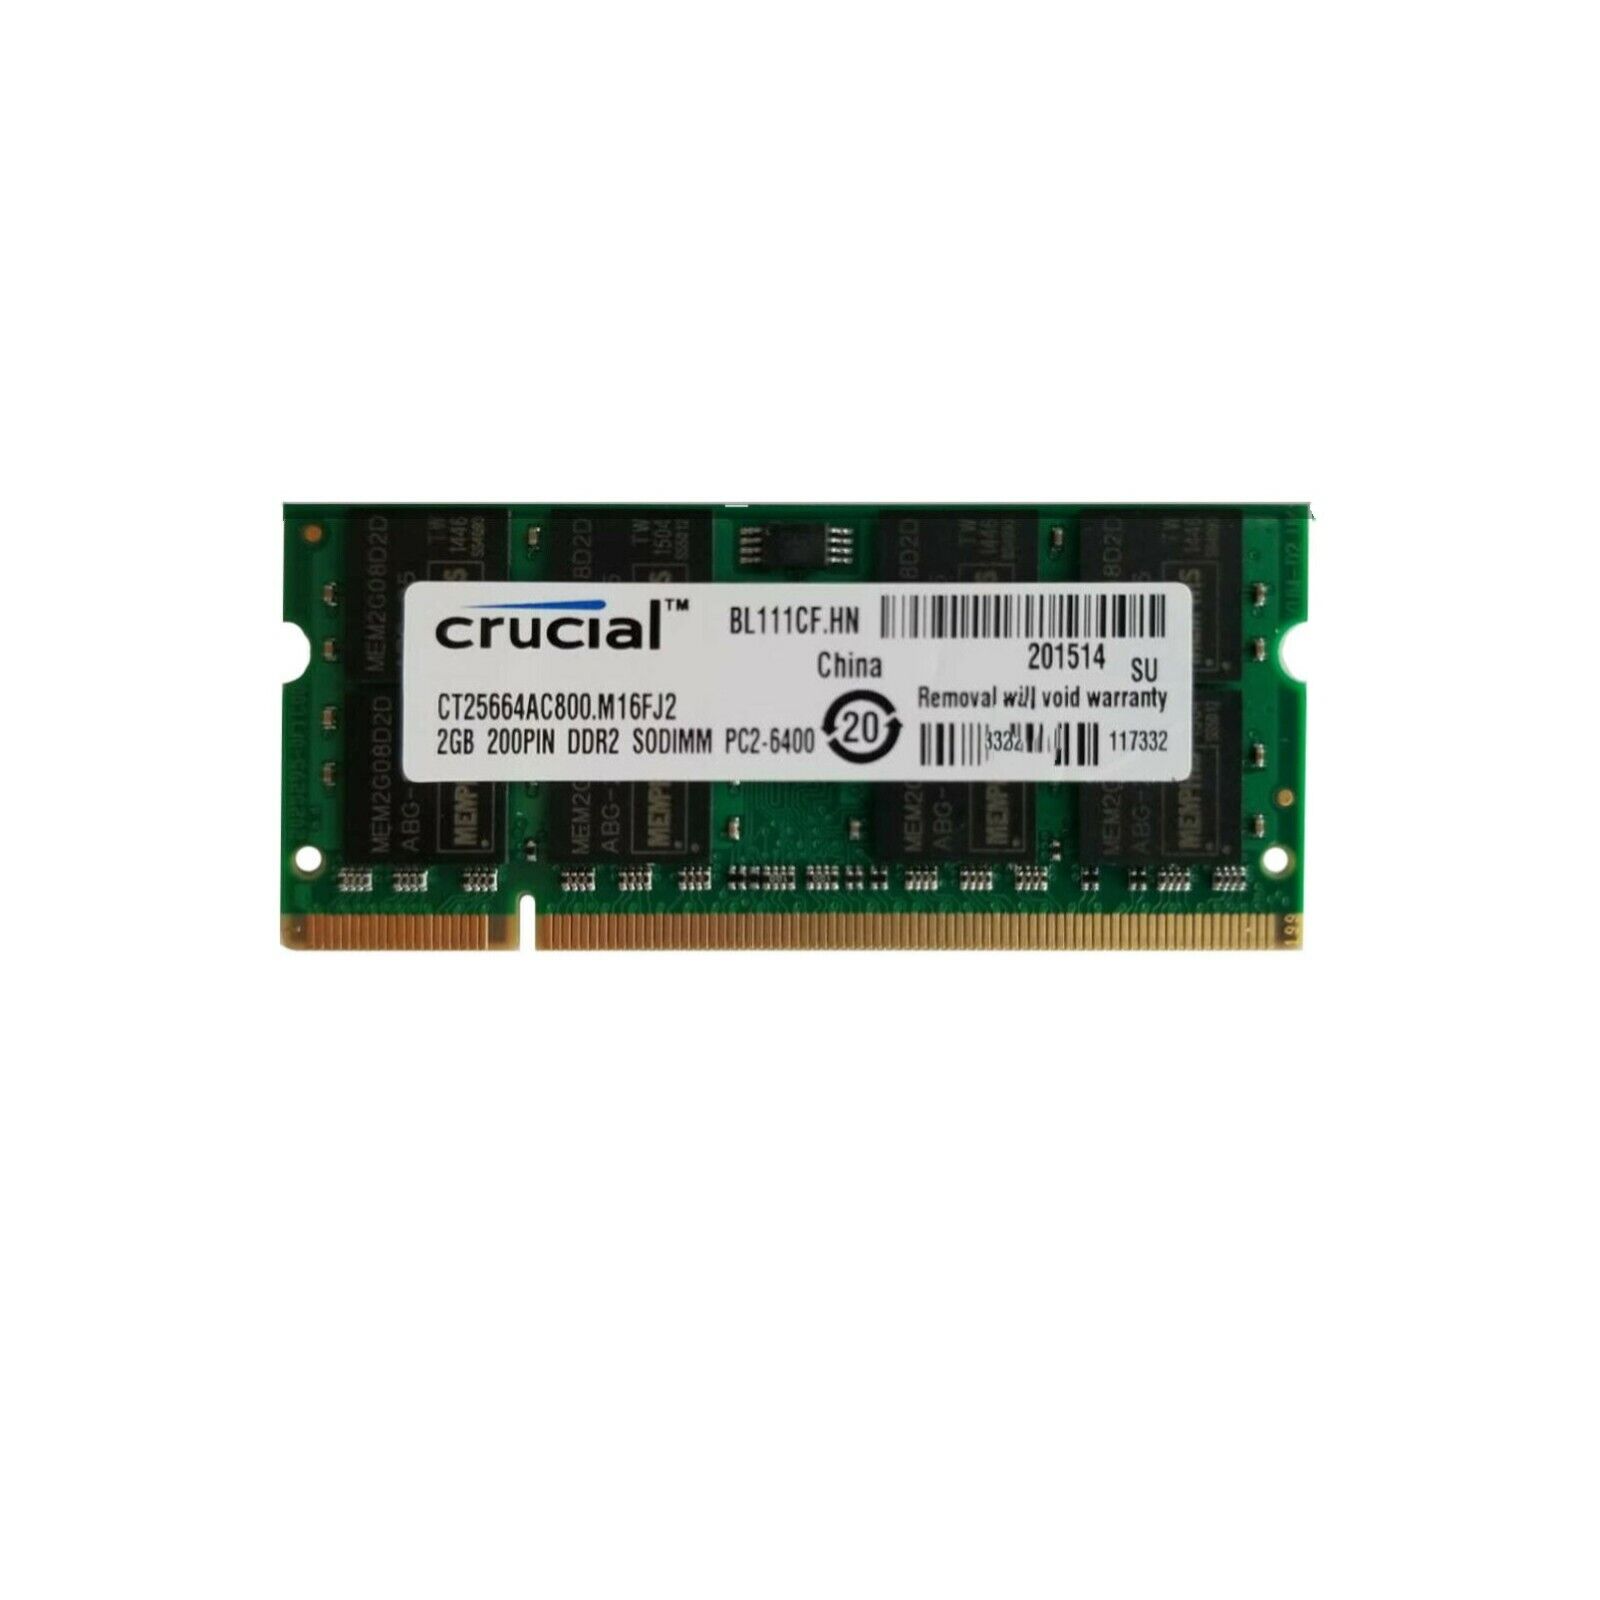 Crucial DDR2 2GB 4GB 8GB 800MHz PC2-6400 Sodimm Notebook Laptop Memory Ram Lot